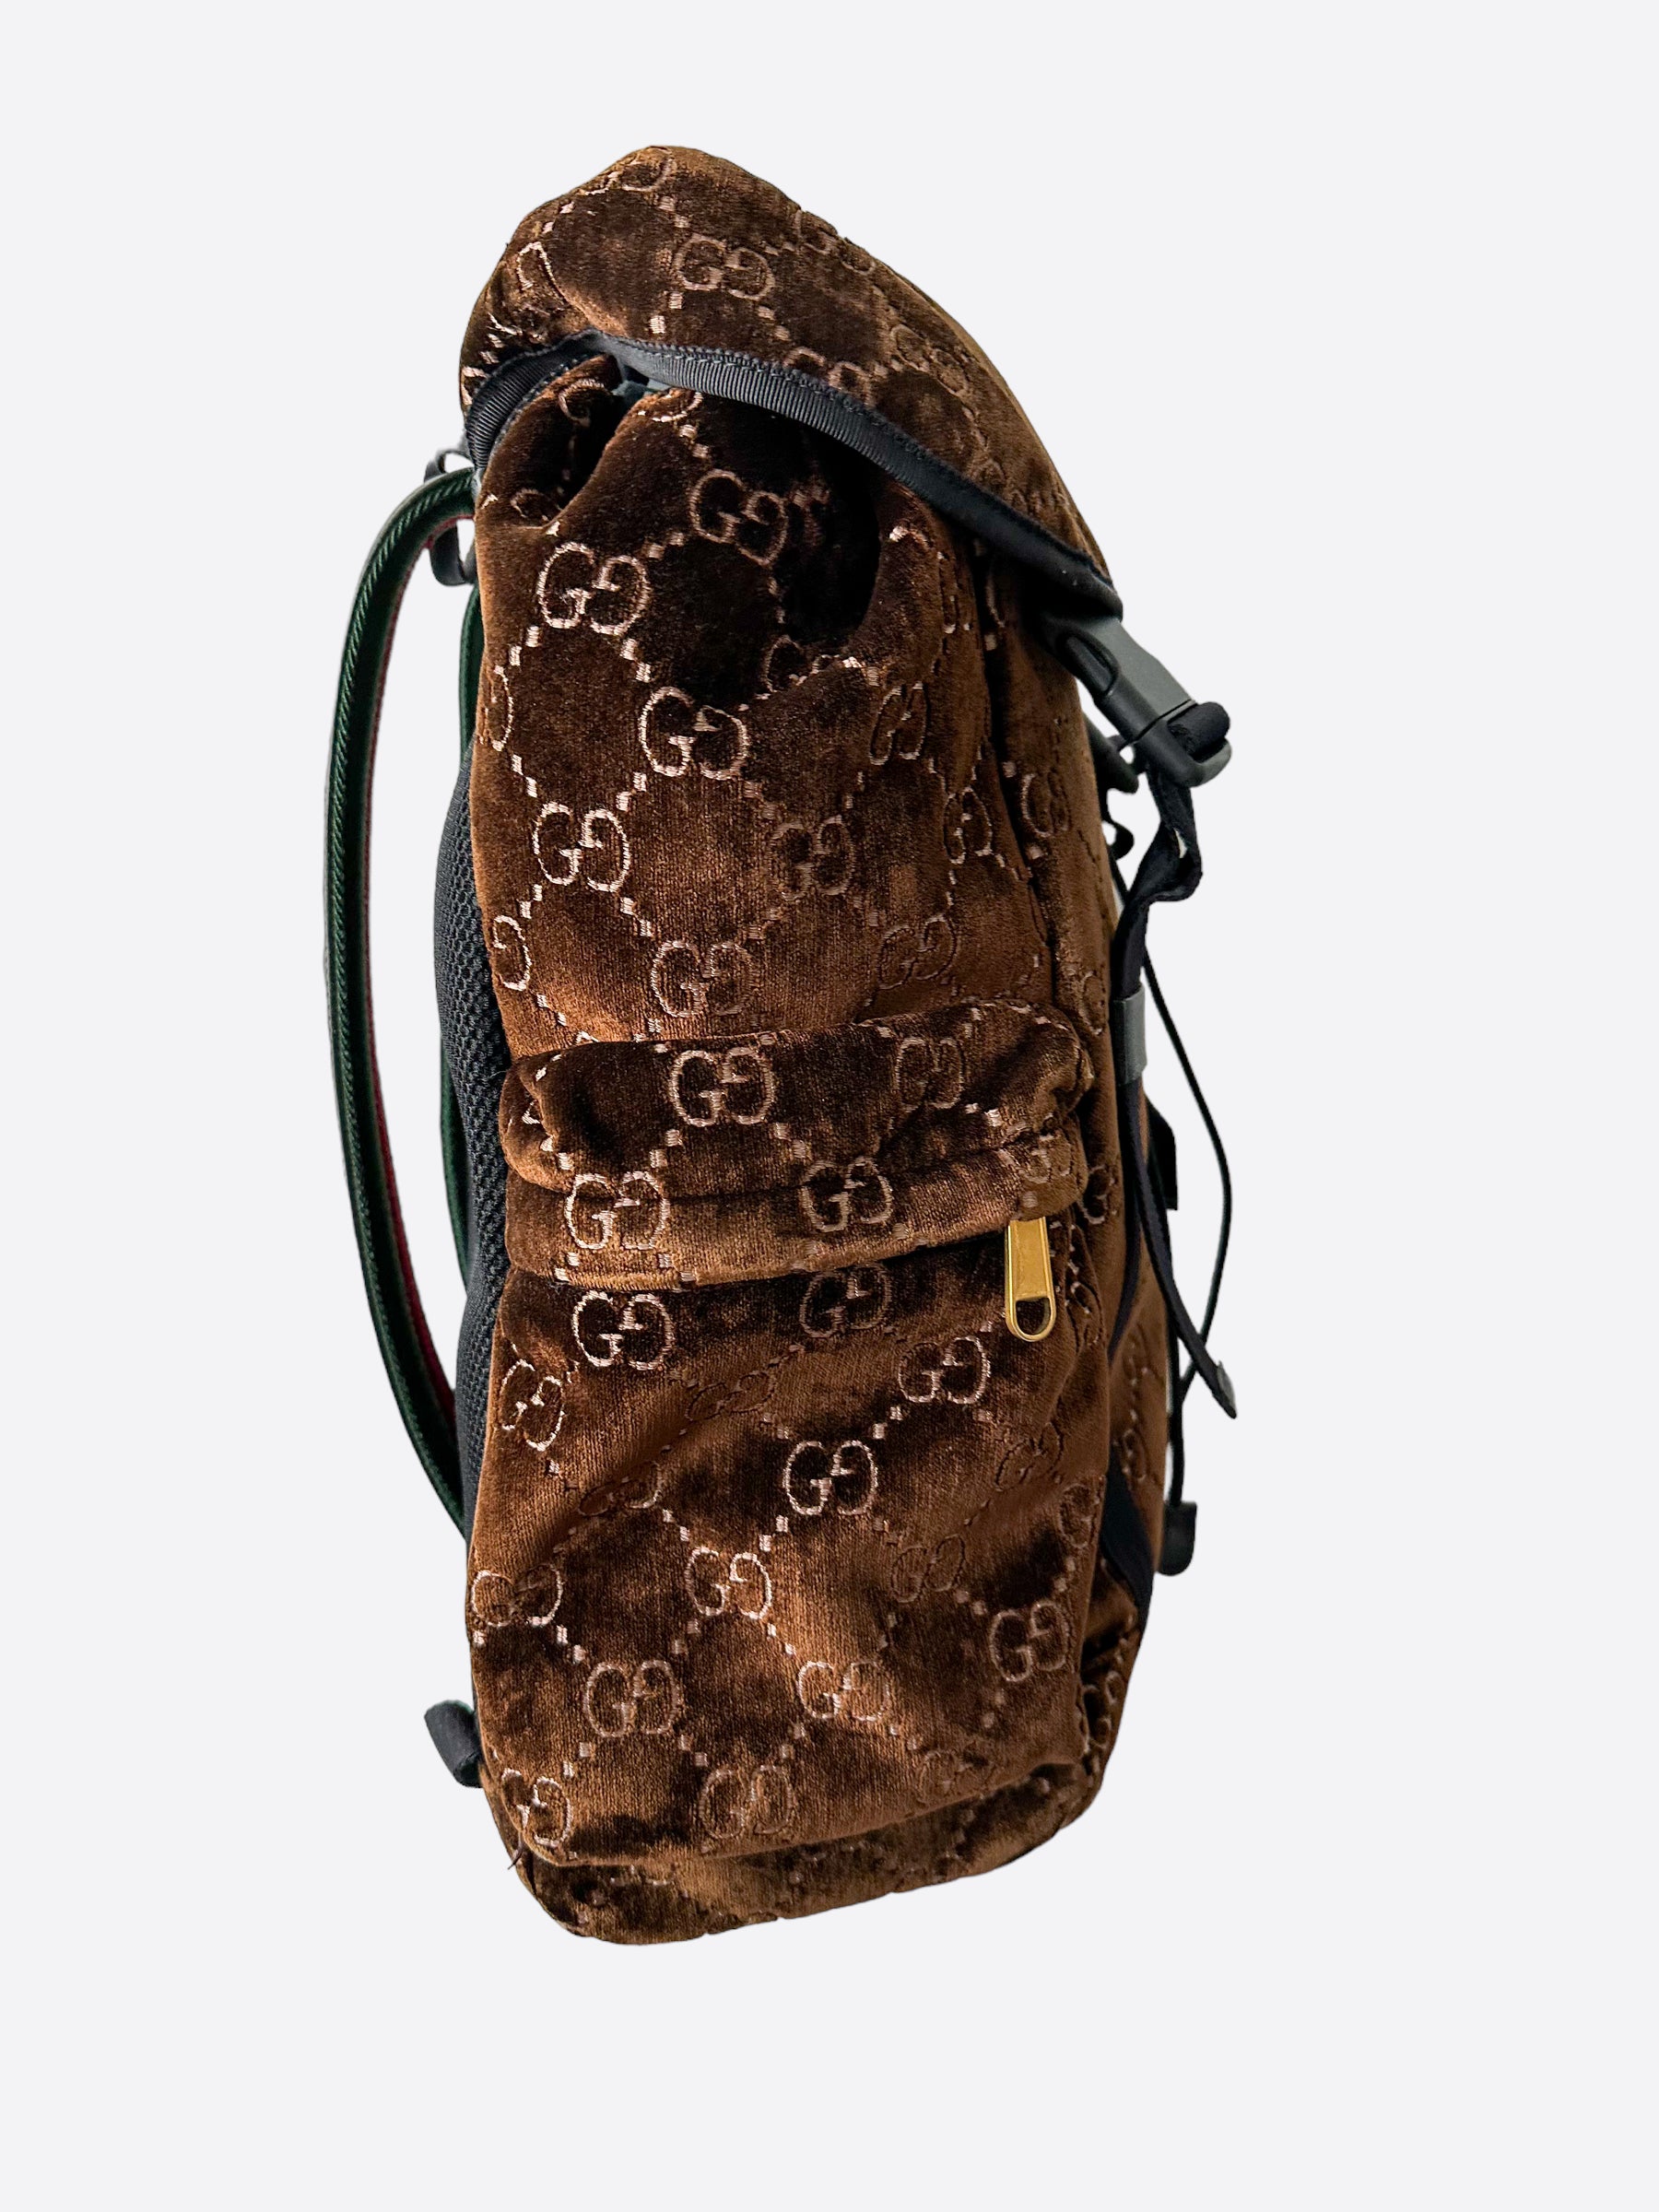 Gucci Soft Backpack Monogram GG Black/Brown - US